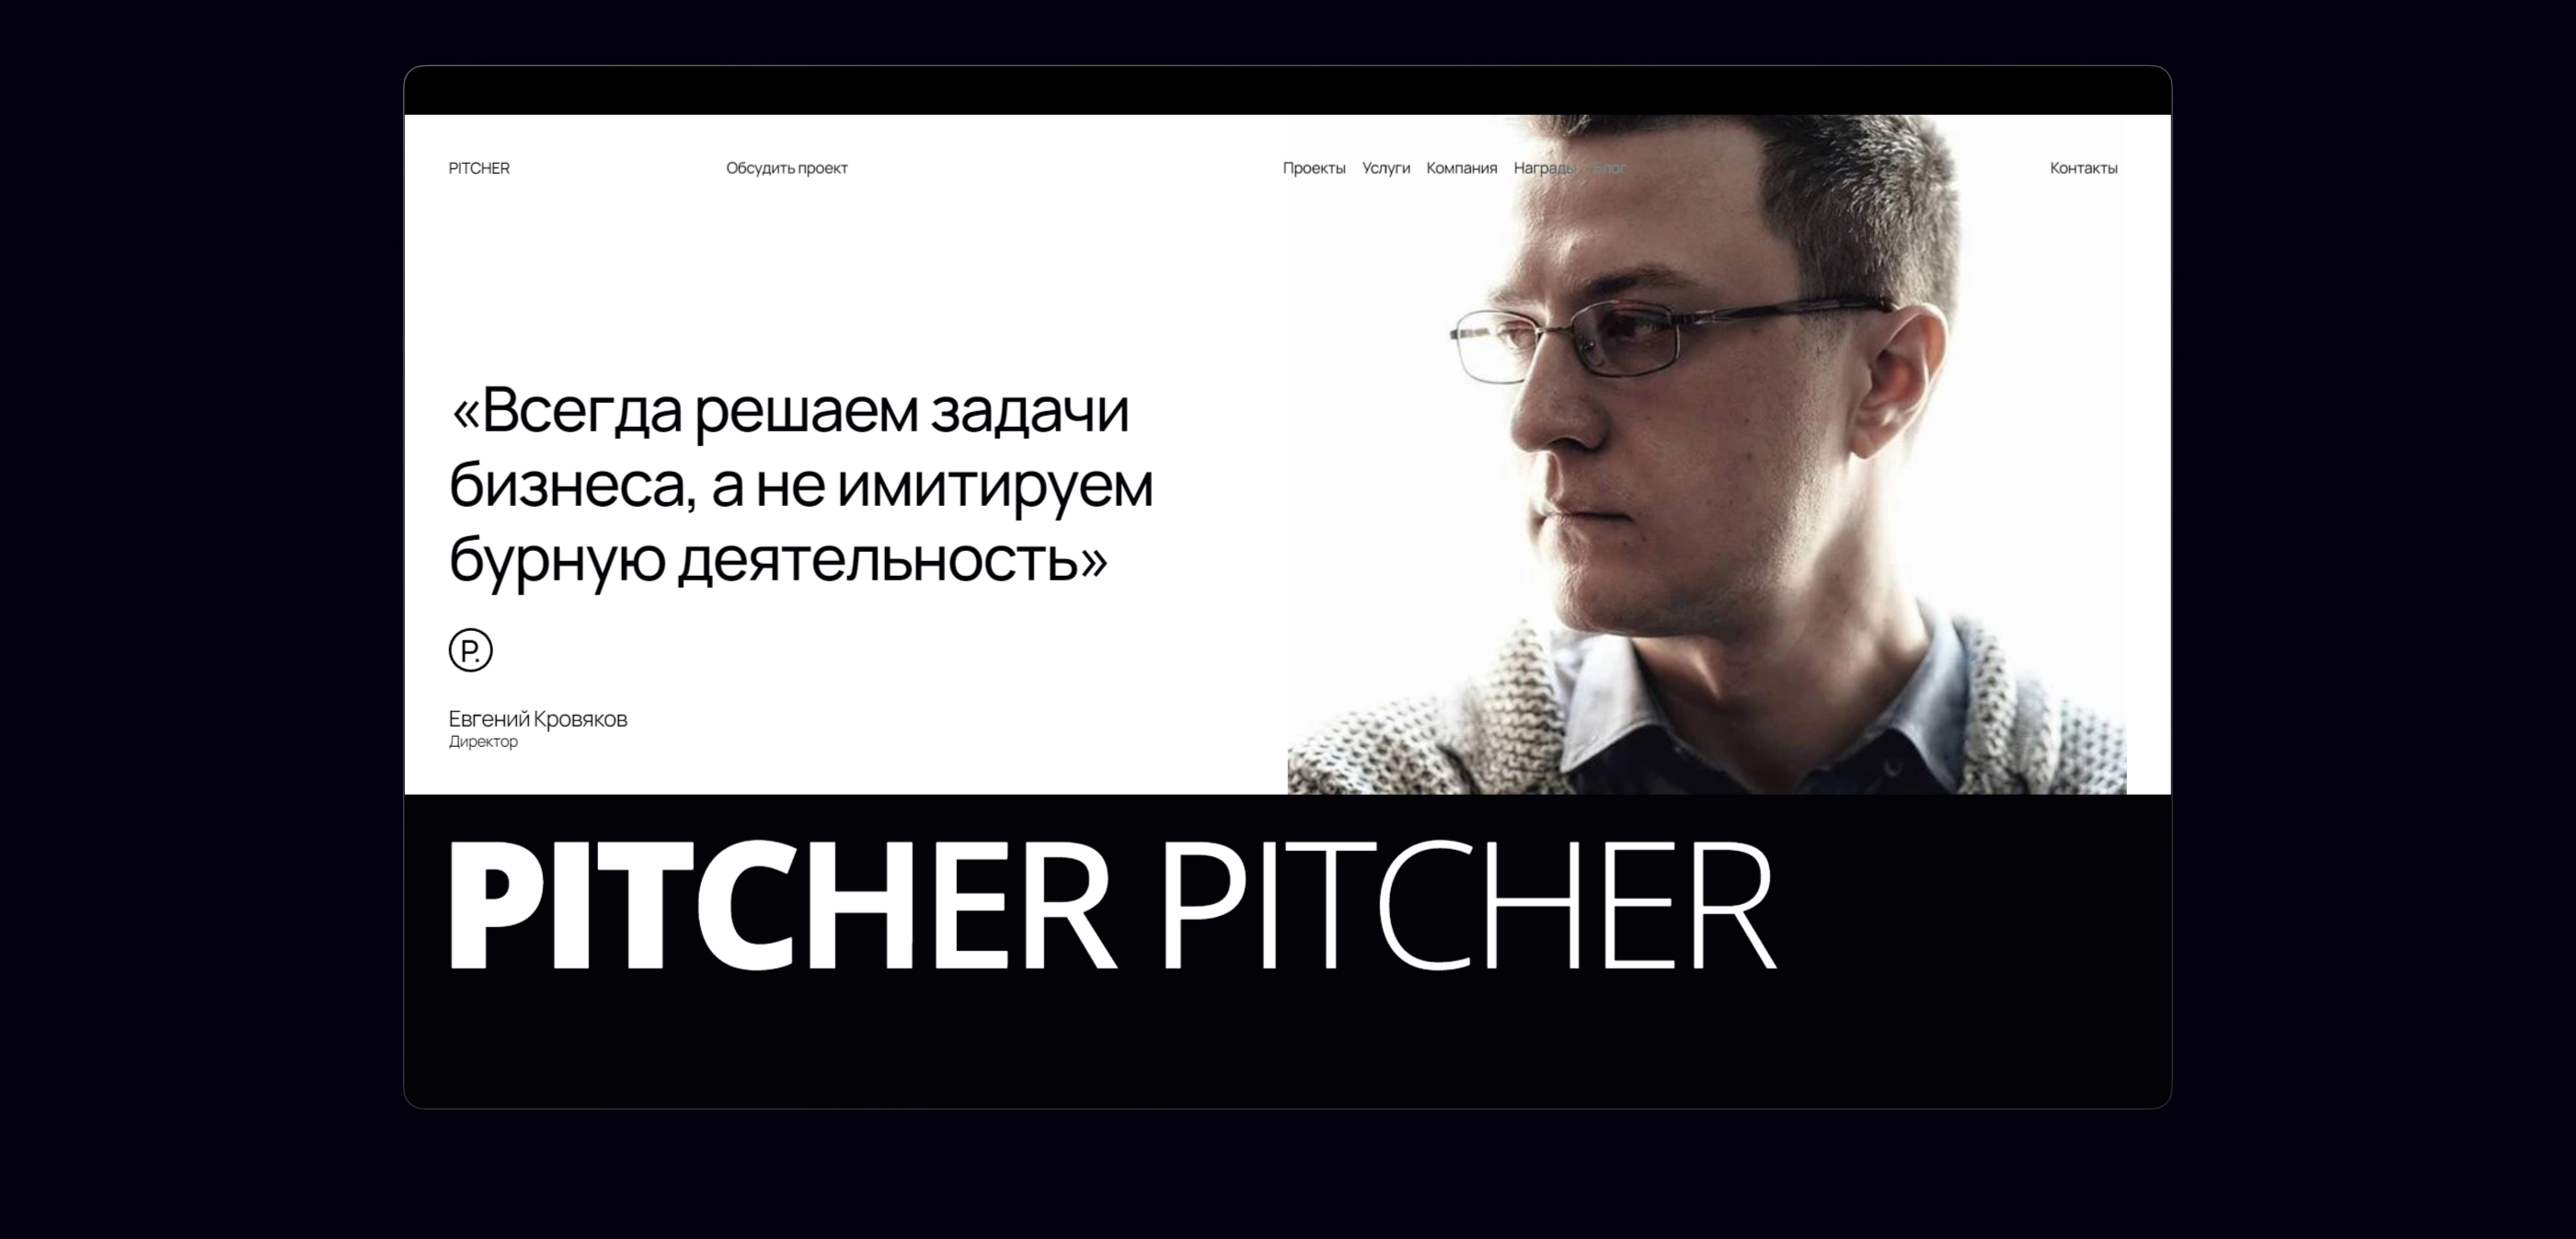 Pitcher — Изображение №14 — Интерфейсы, 3D на Dprofile